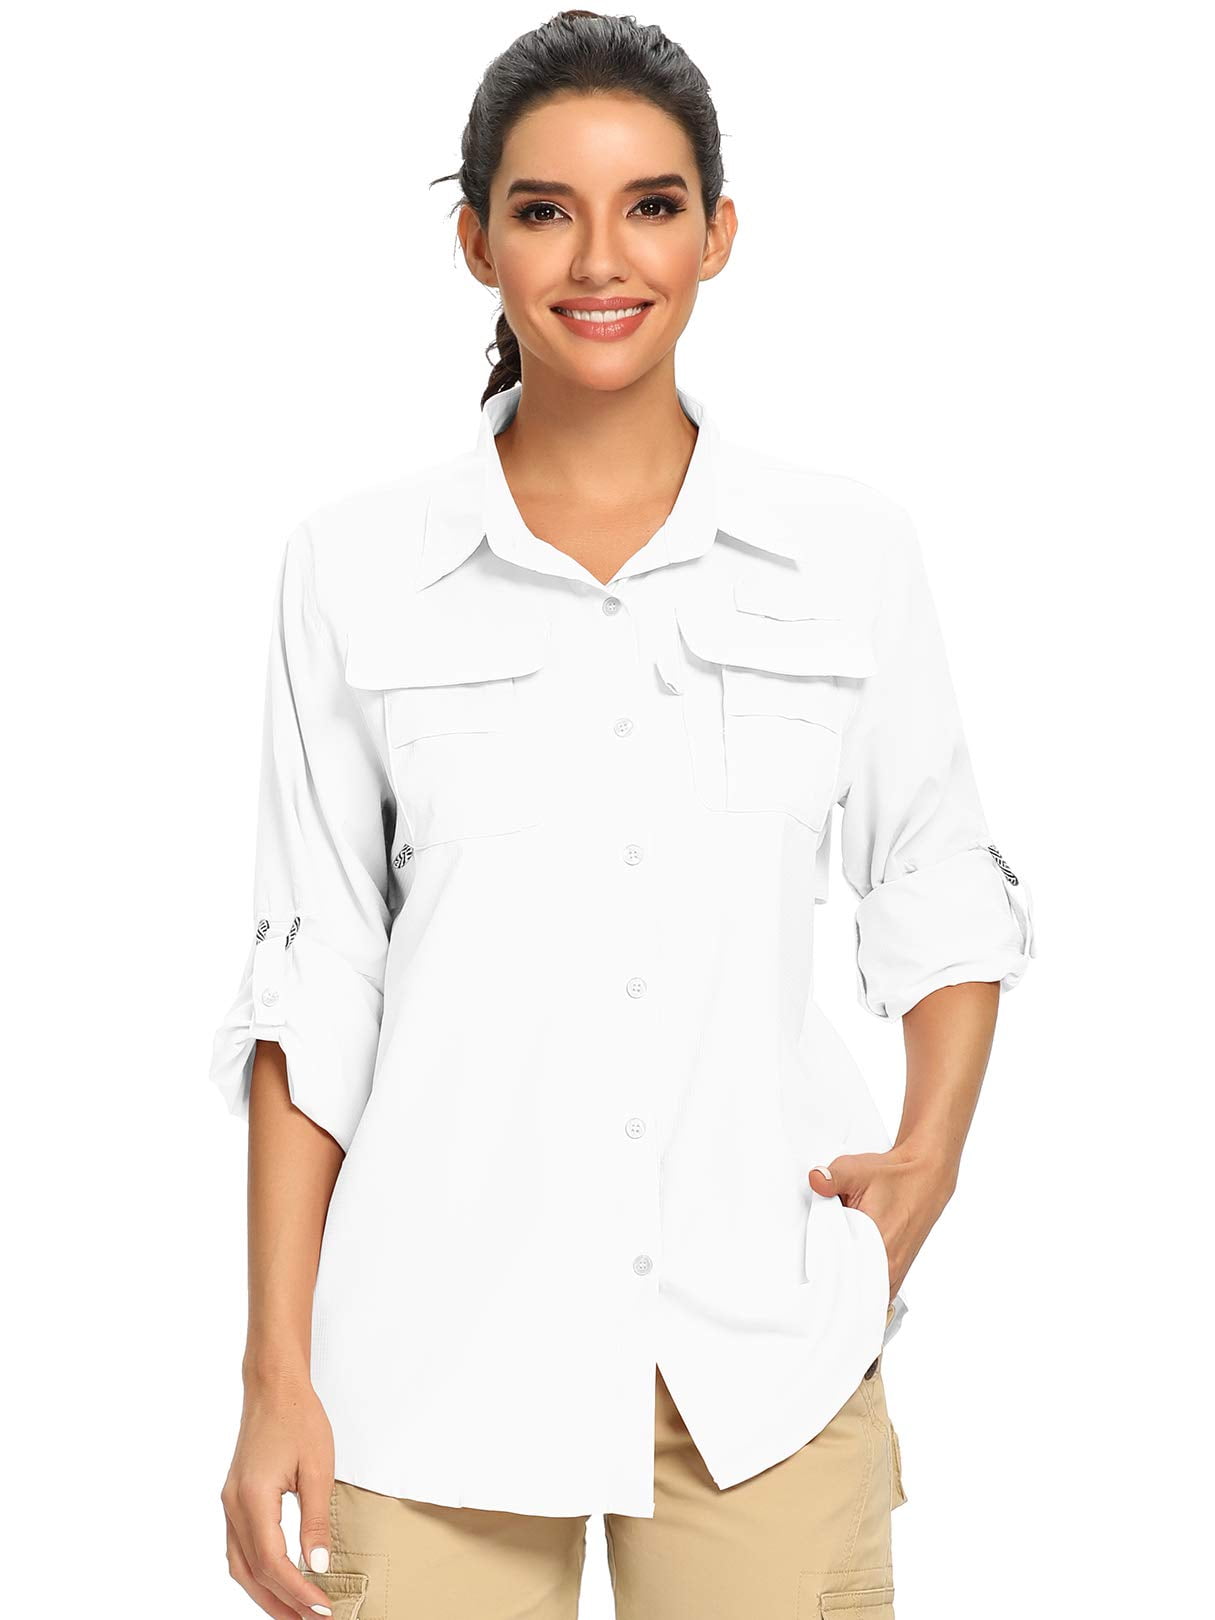 Anteef Women's UPF 50+ Long Sleeve UV Sun Protection Safari Shirt, Quick  Dry SPF Hiking Fishing Breathable Shirts, Light Gray, X-Small : :  Clothing, Shoes & Accessories